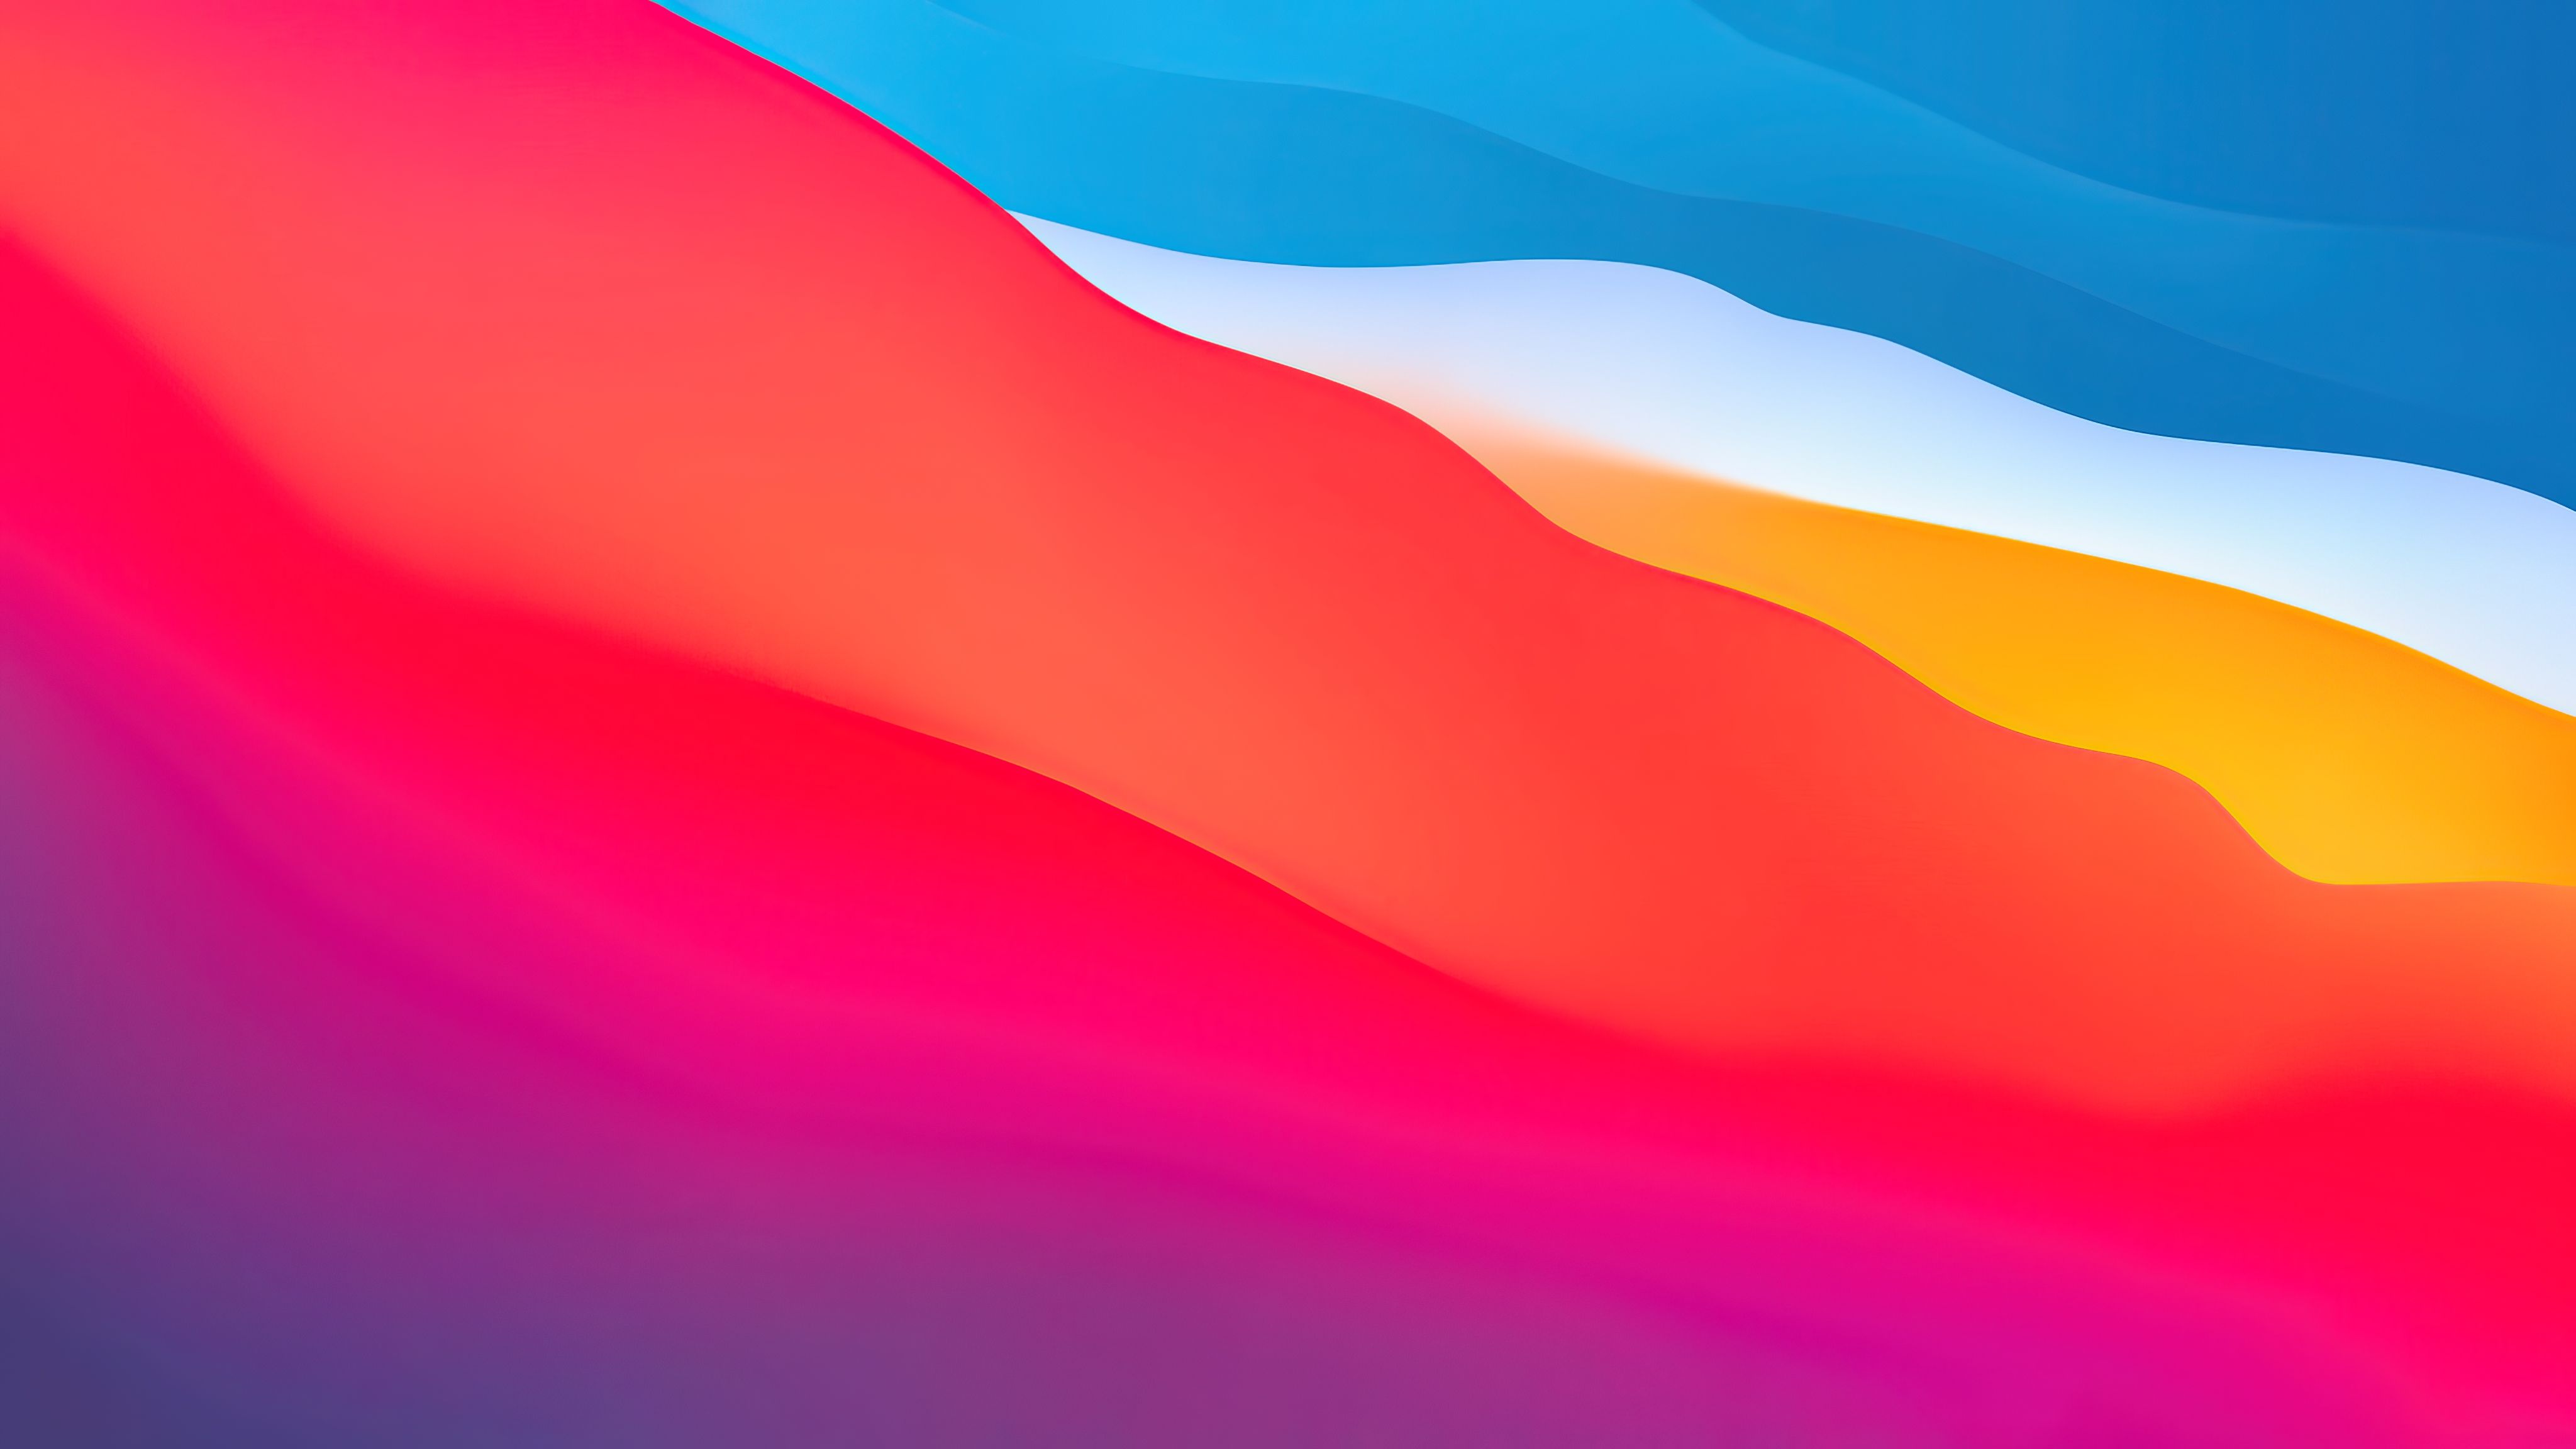 4096x2304 Macos Big Sur 4k Wallpaper Apple Layers Fluidic Colorful Wwdc Stock 2022 Gradients